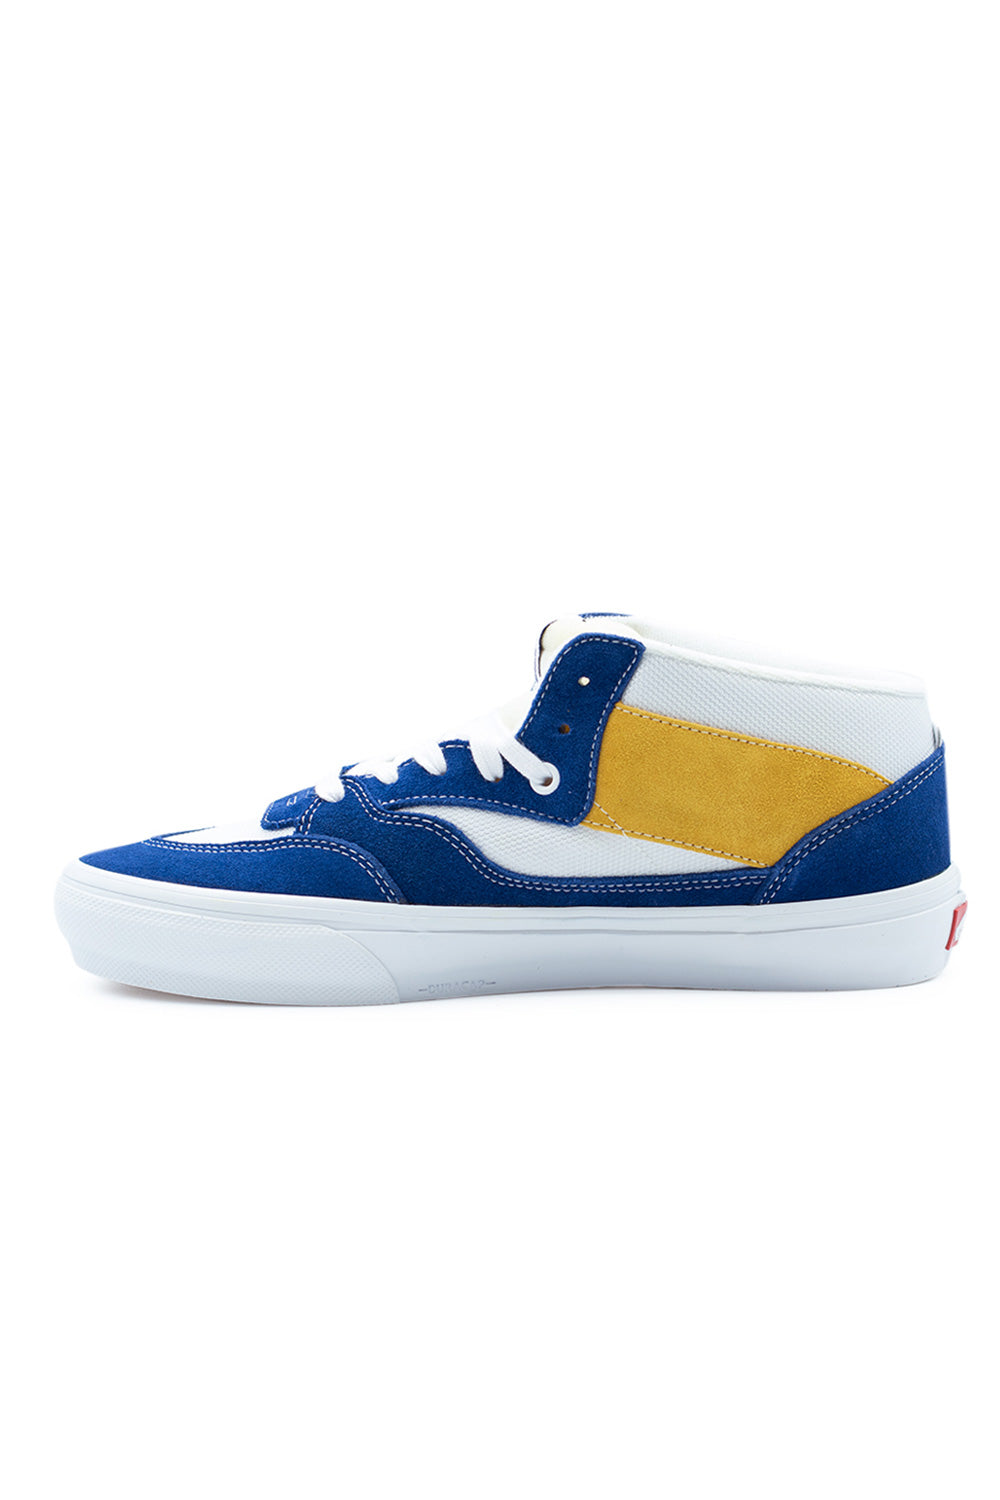 Vans Half Cab 92 (Skate) Shoe Athletic Blue / Yellow - BONKERS